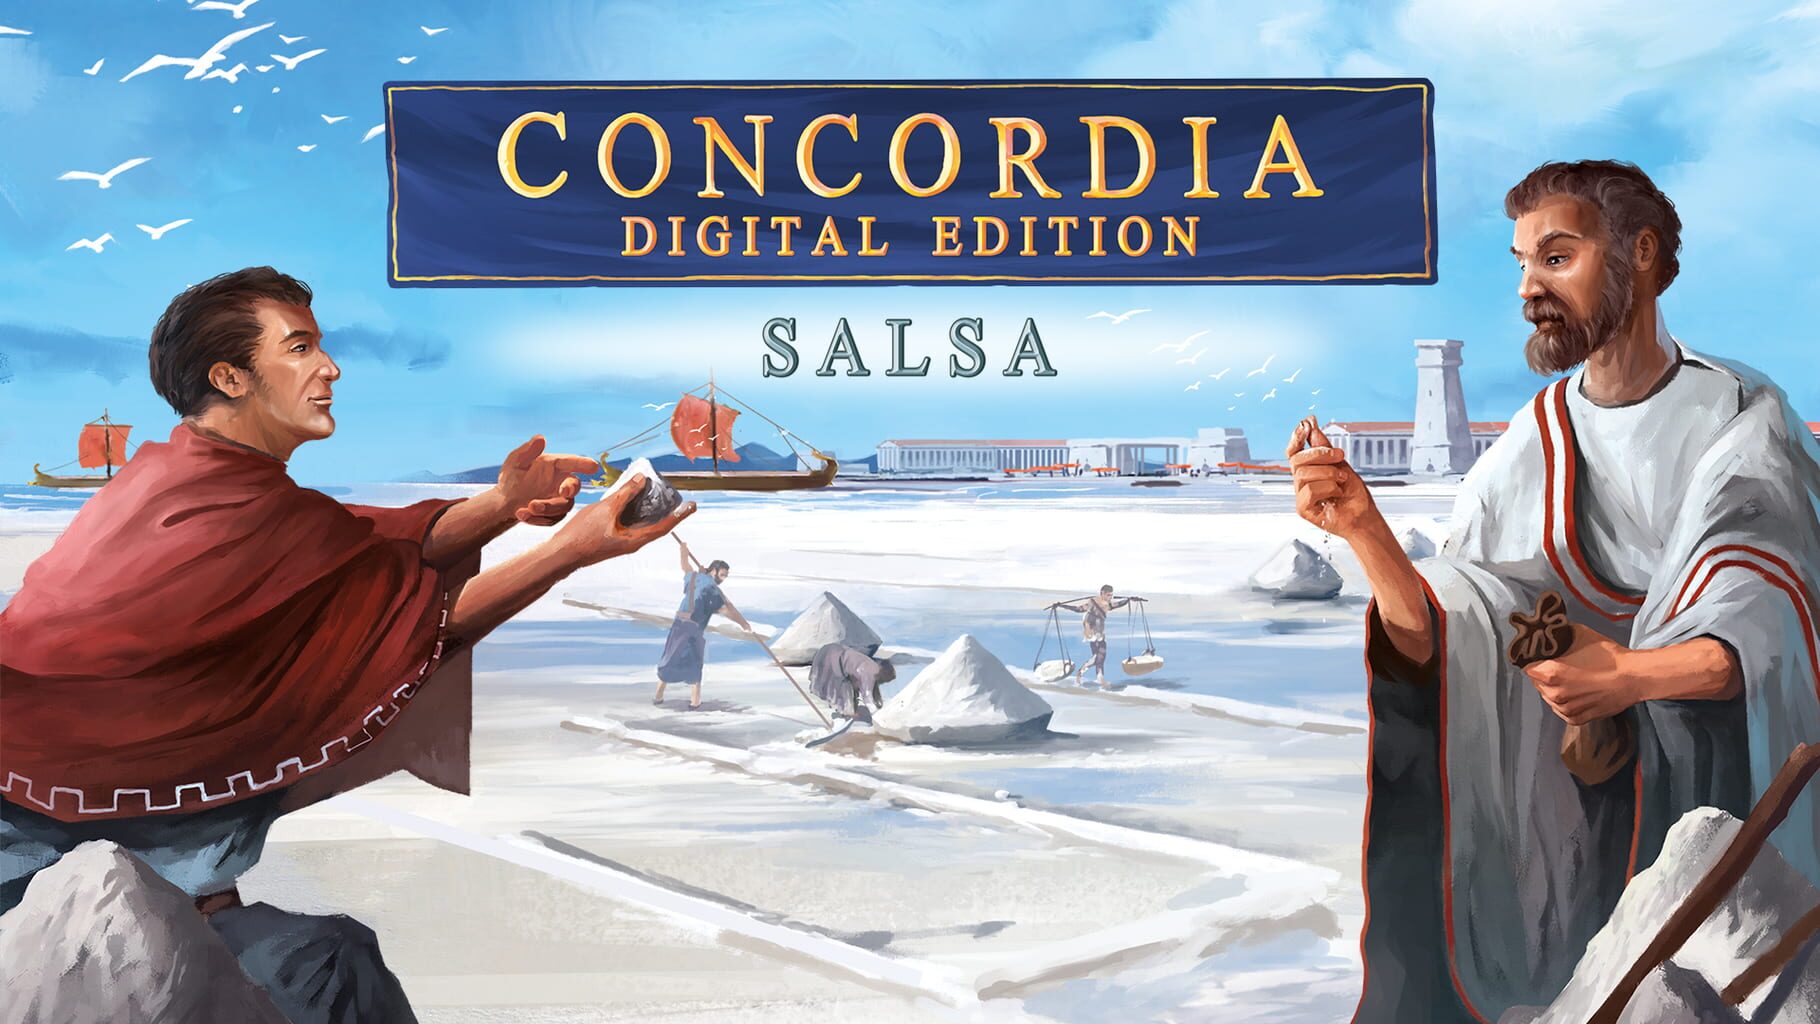 Concordia: Digital Edition - Salsa artwork